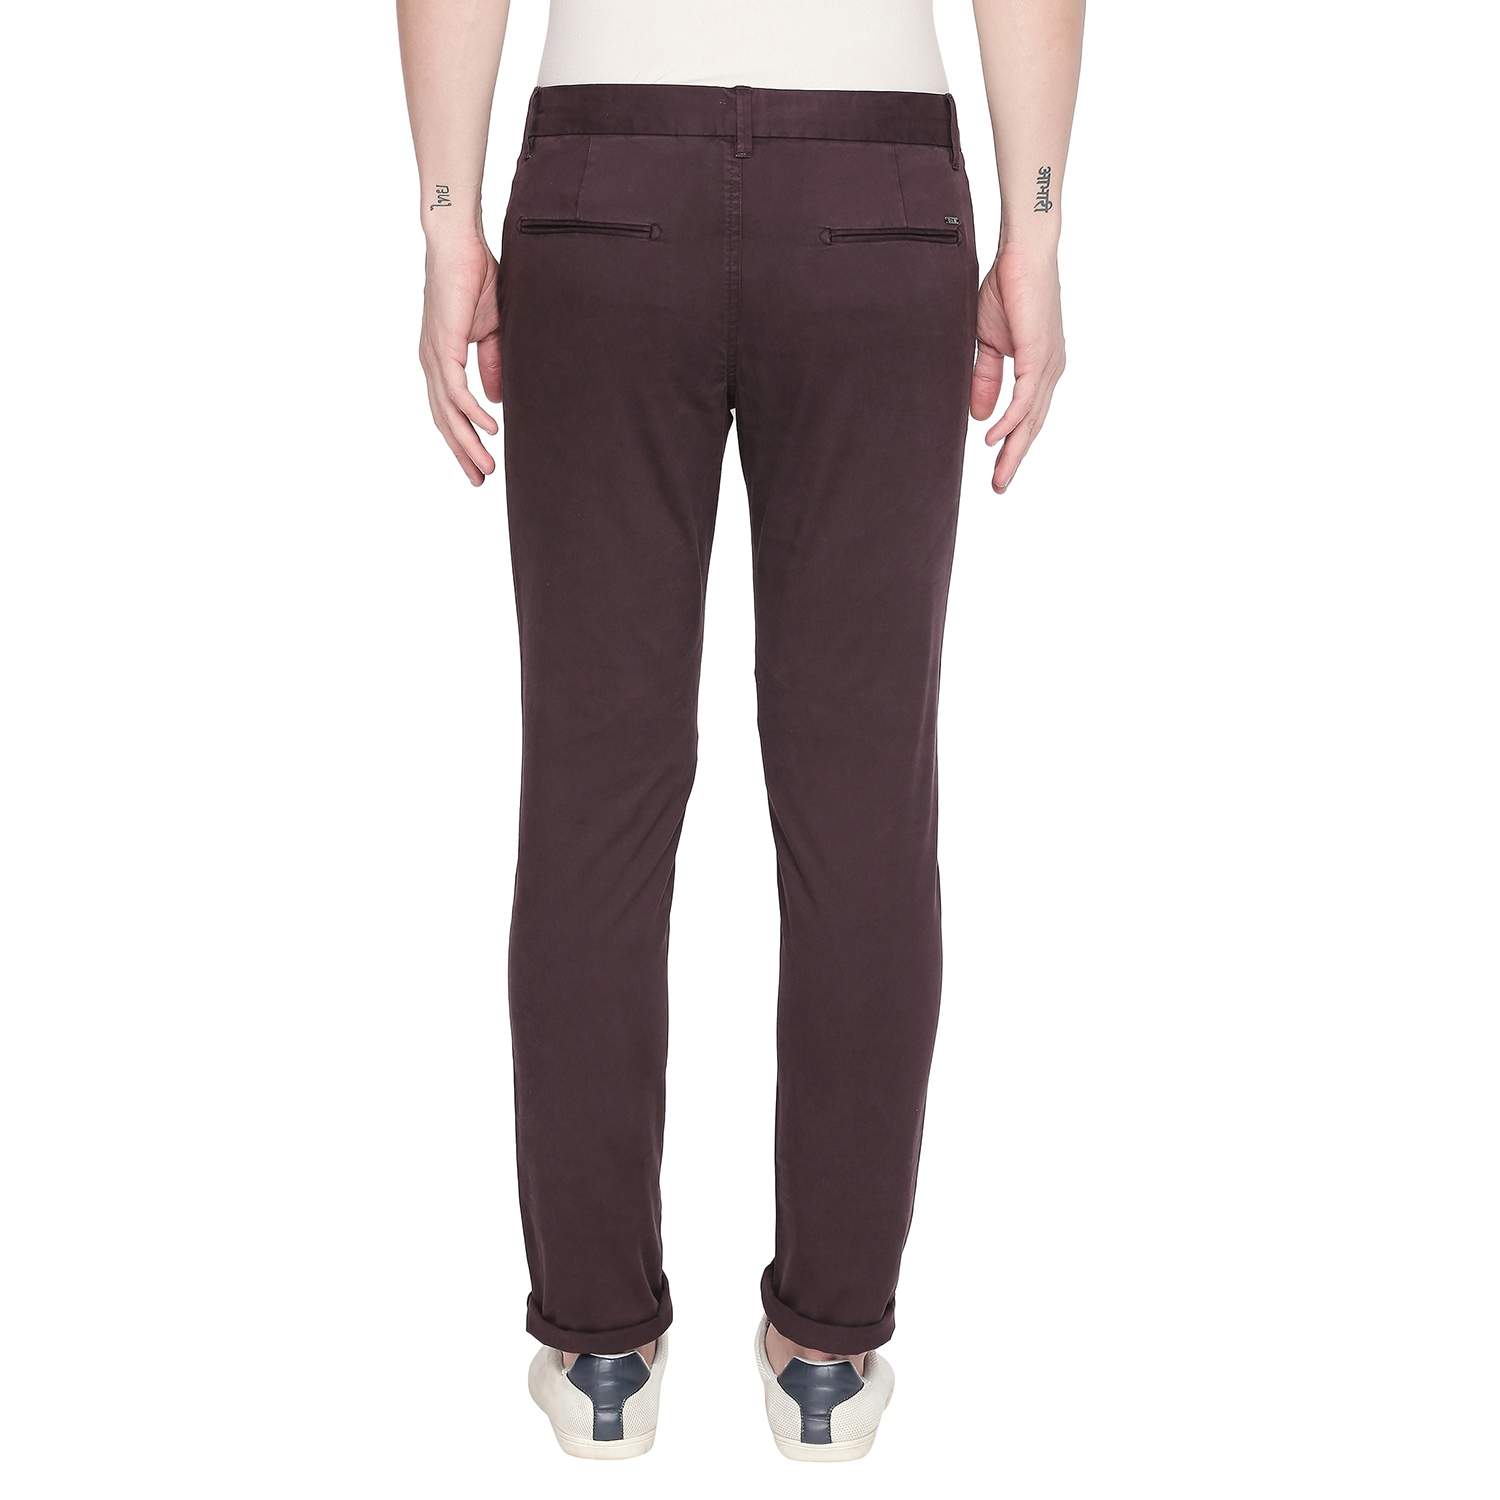 Basics | Men's Maroon Cotton Blend Solid Trouser 1